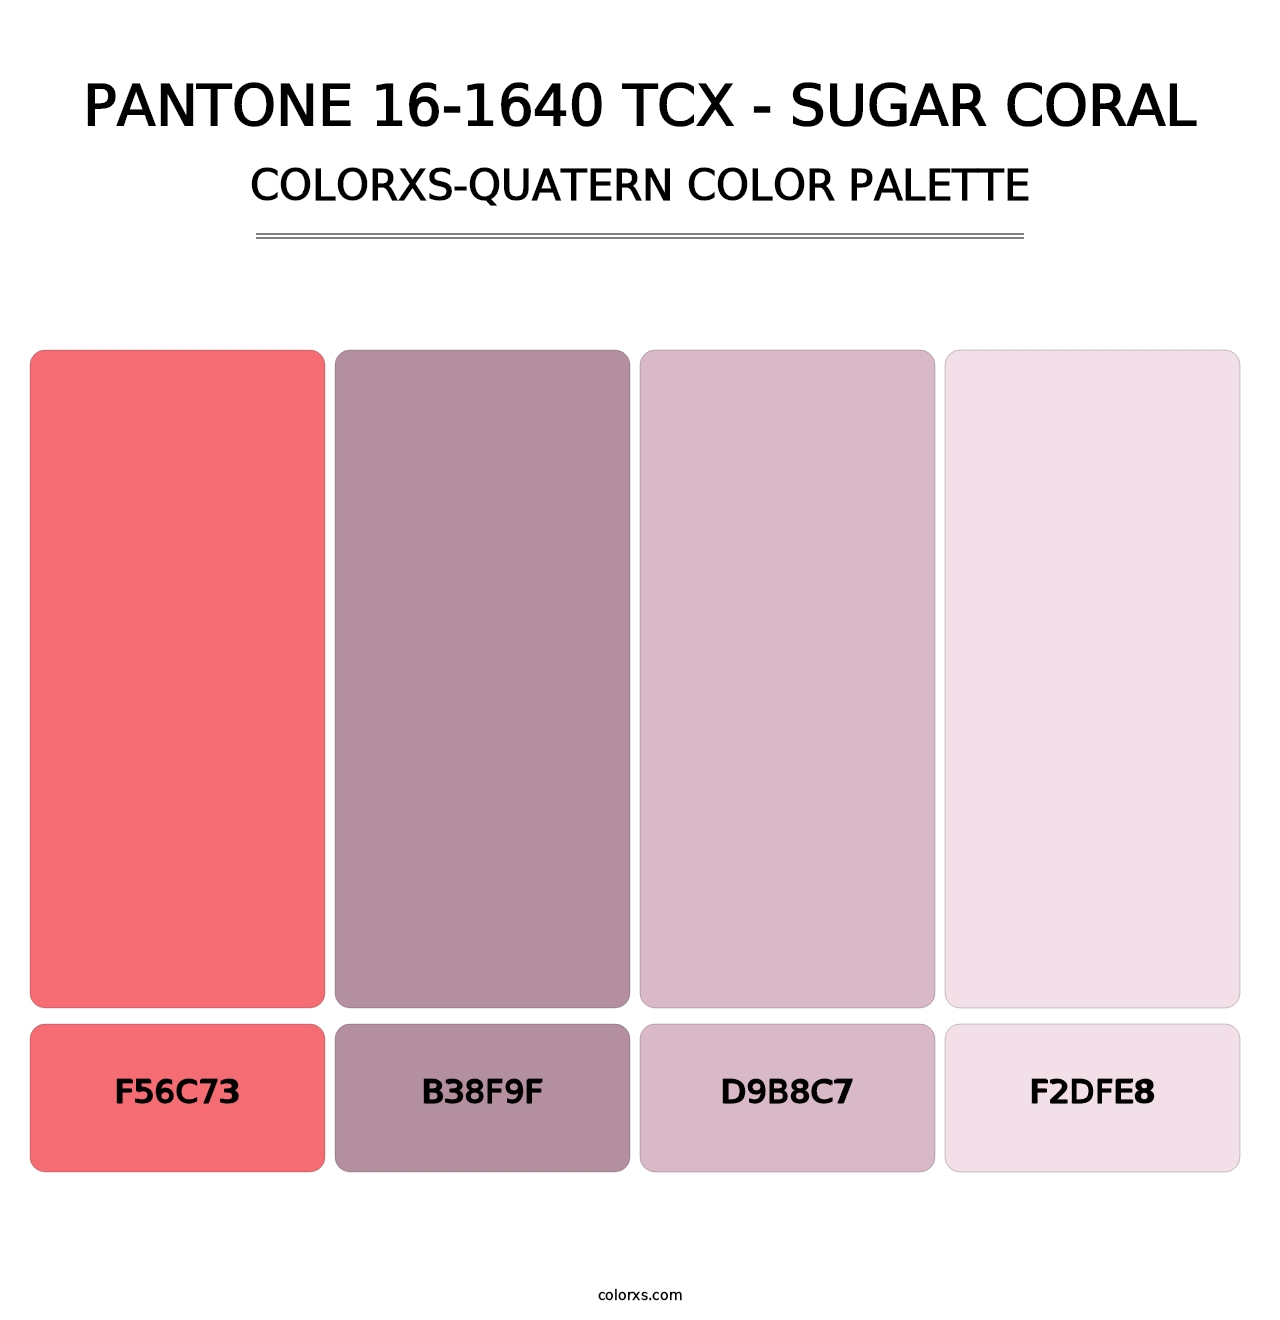 PANTONE 16-1640 TCX - Sugar Coral - Colorxs Quatern Palette